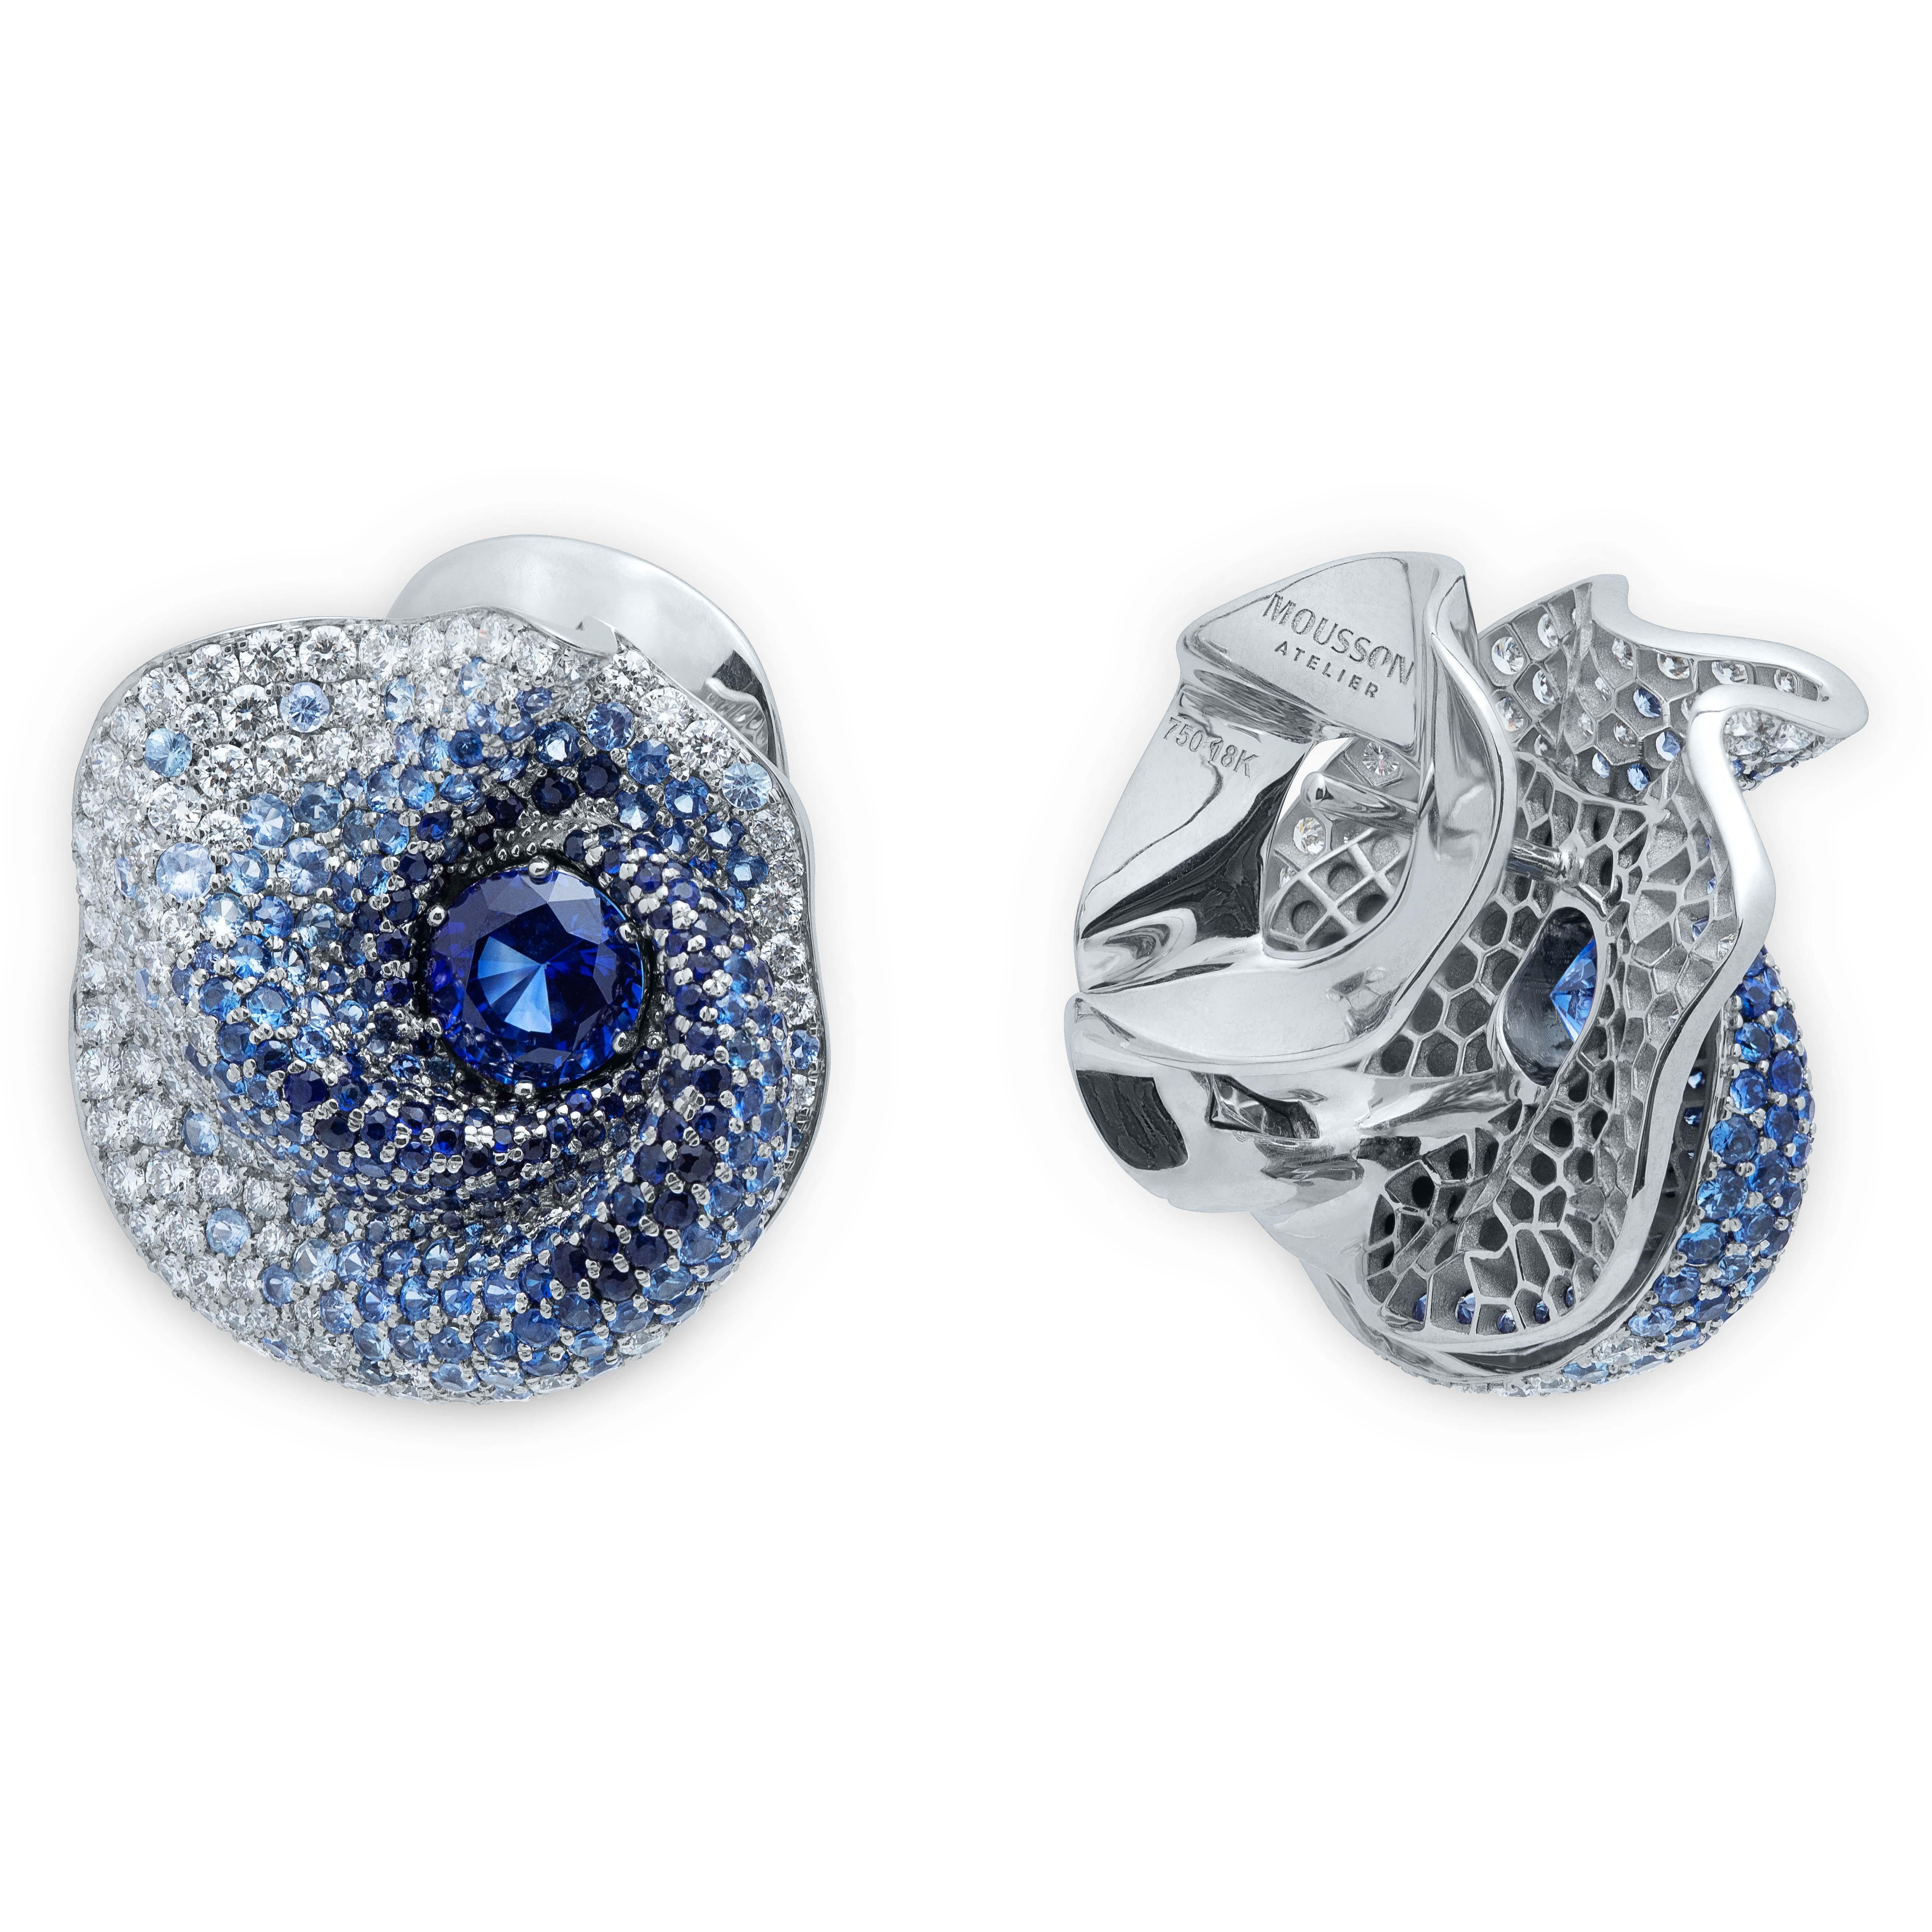 Royal Blue 2.70 Carat Sapphires Diamonds 18 Karat White Gold Earrings
Our new Earrings from 